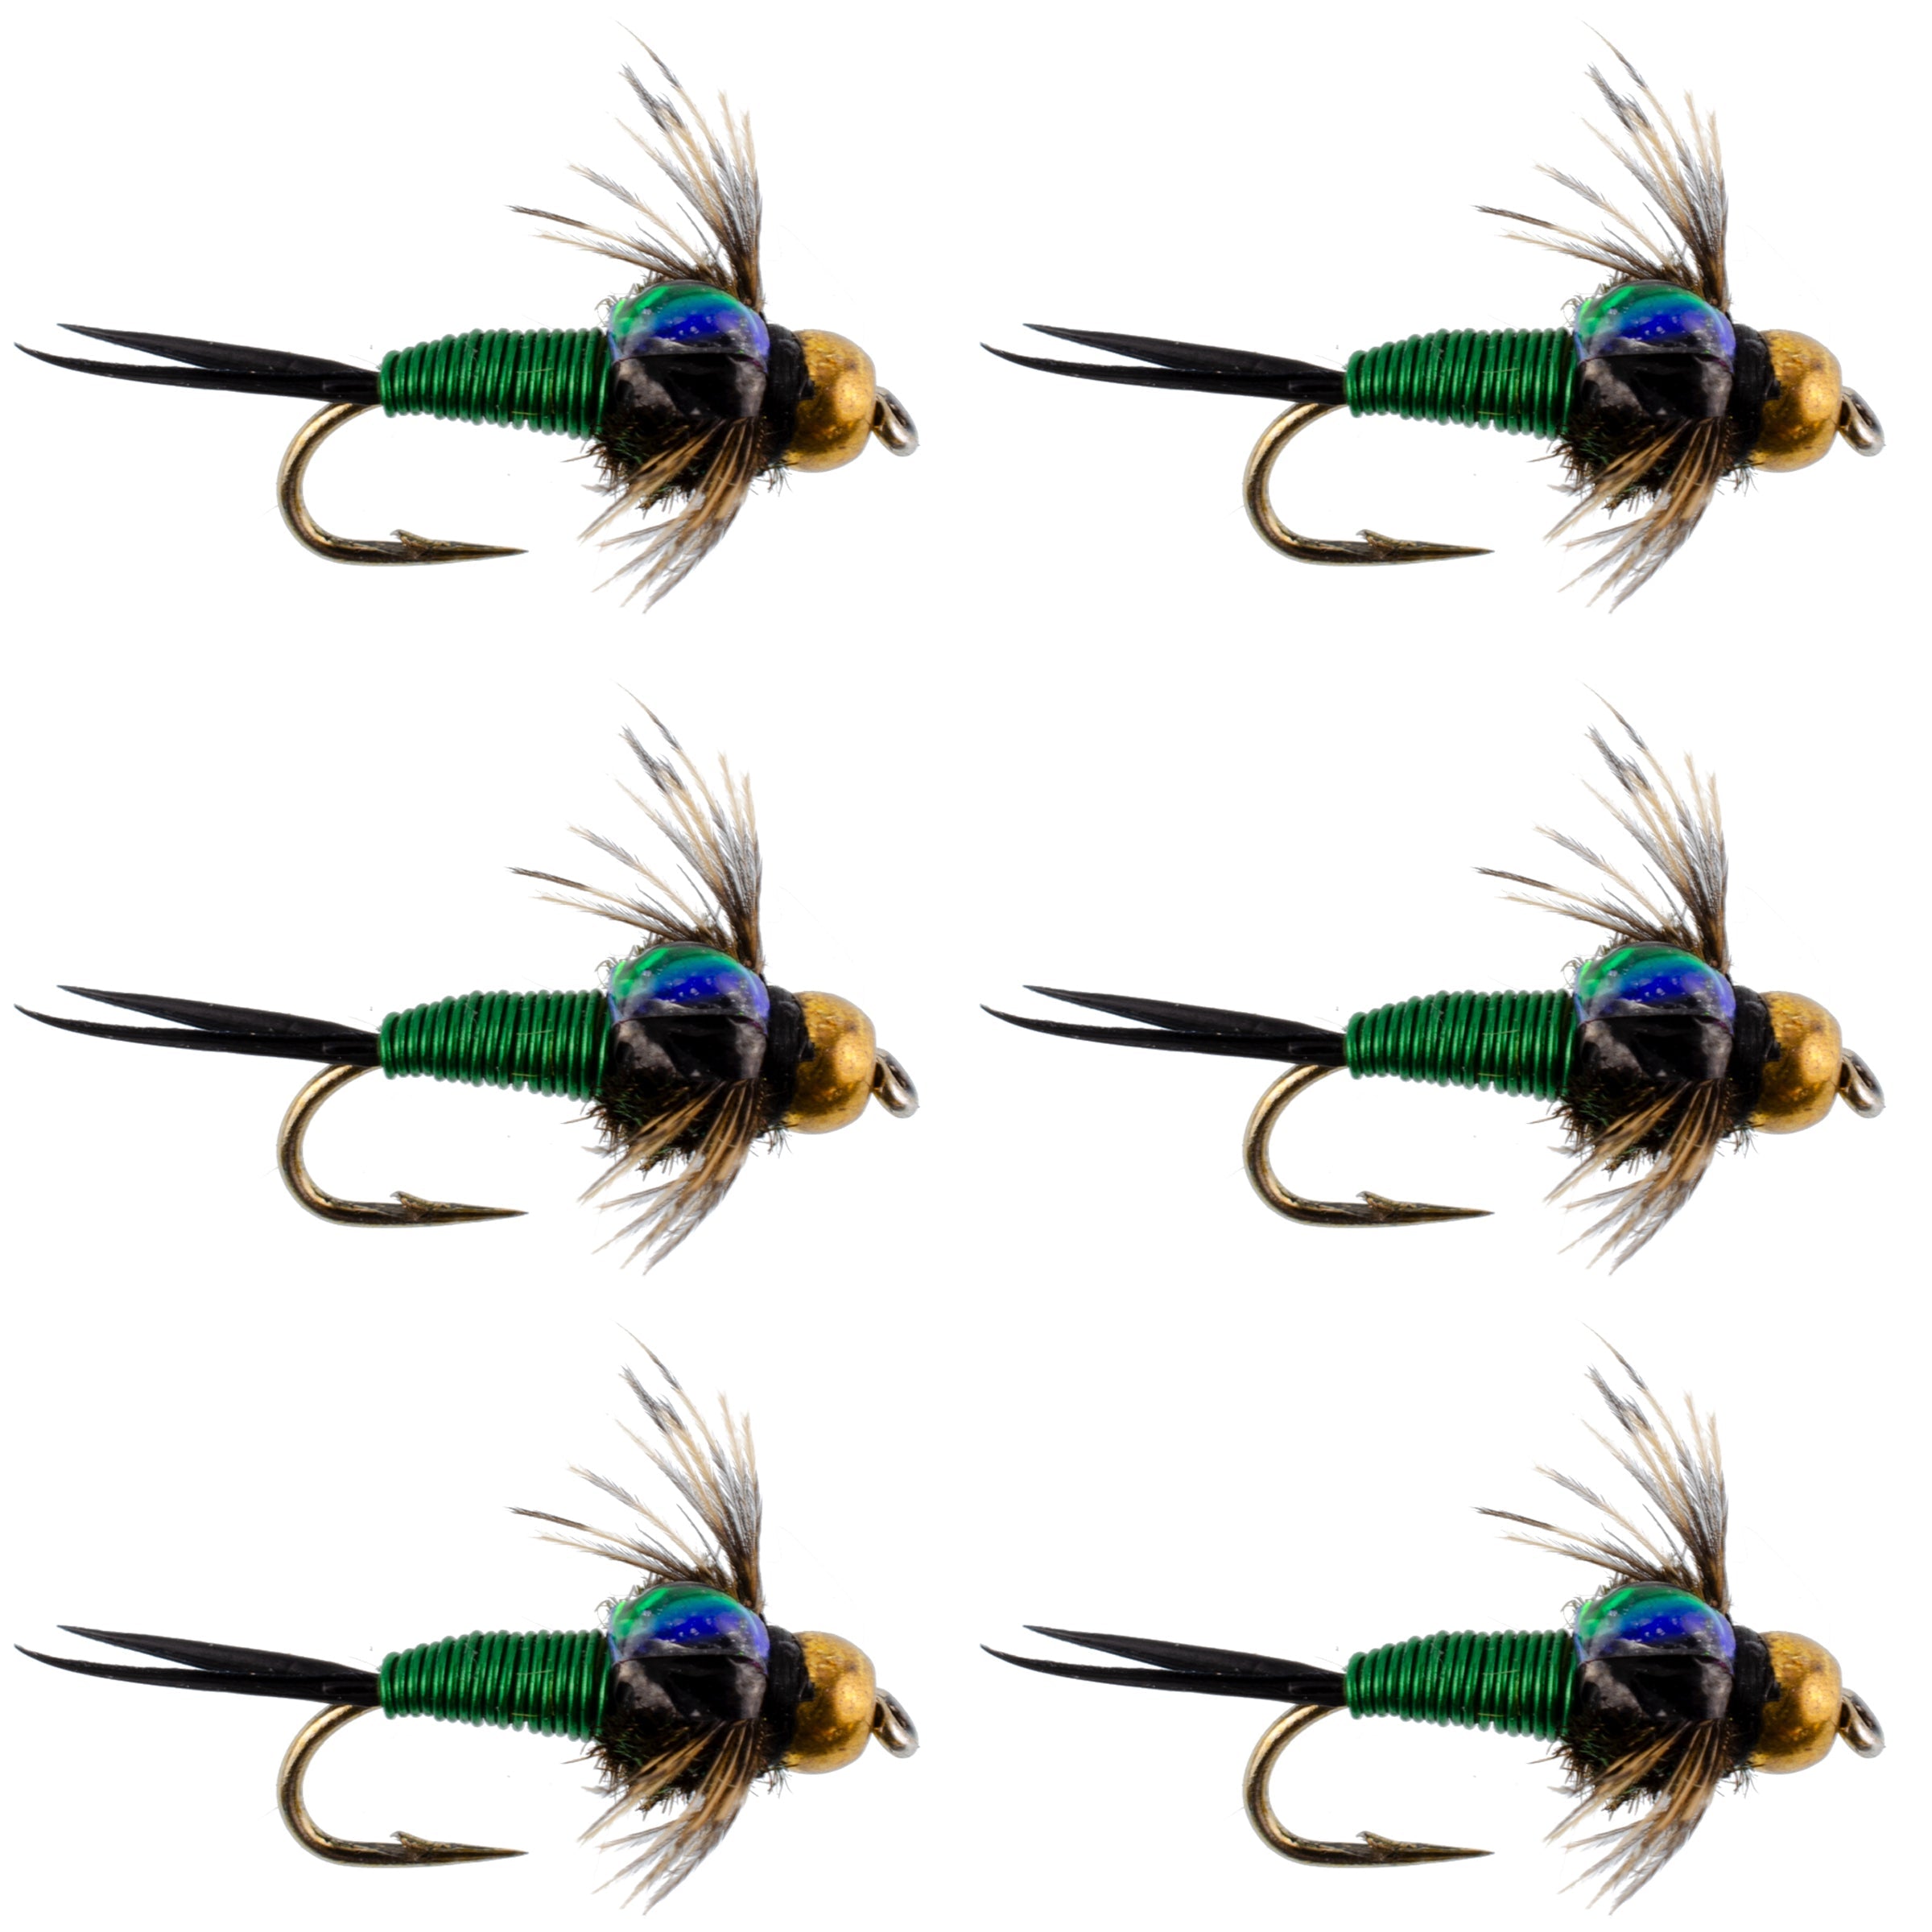 Moscas de pesca con mosca John Nymph de cobre verde con cabeza de cuentas, juego de 6 anzuelos para moscas, tamaño 16 